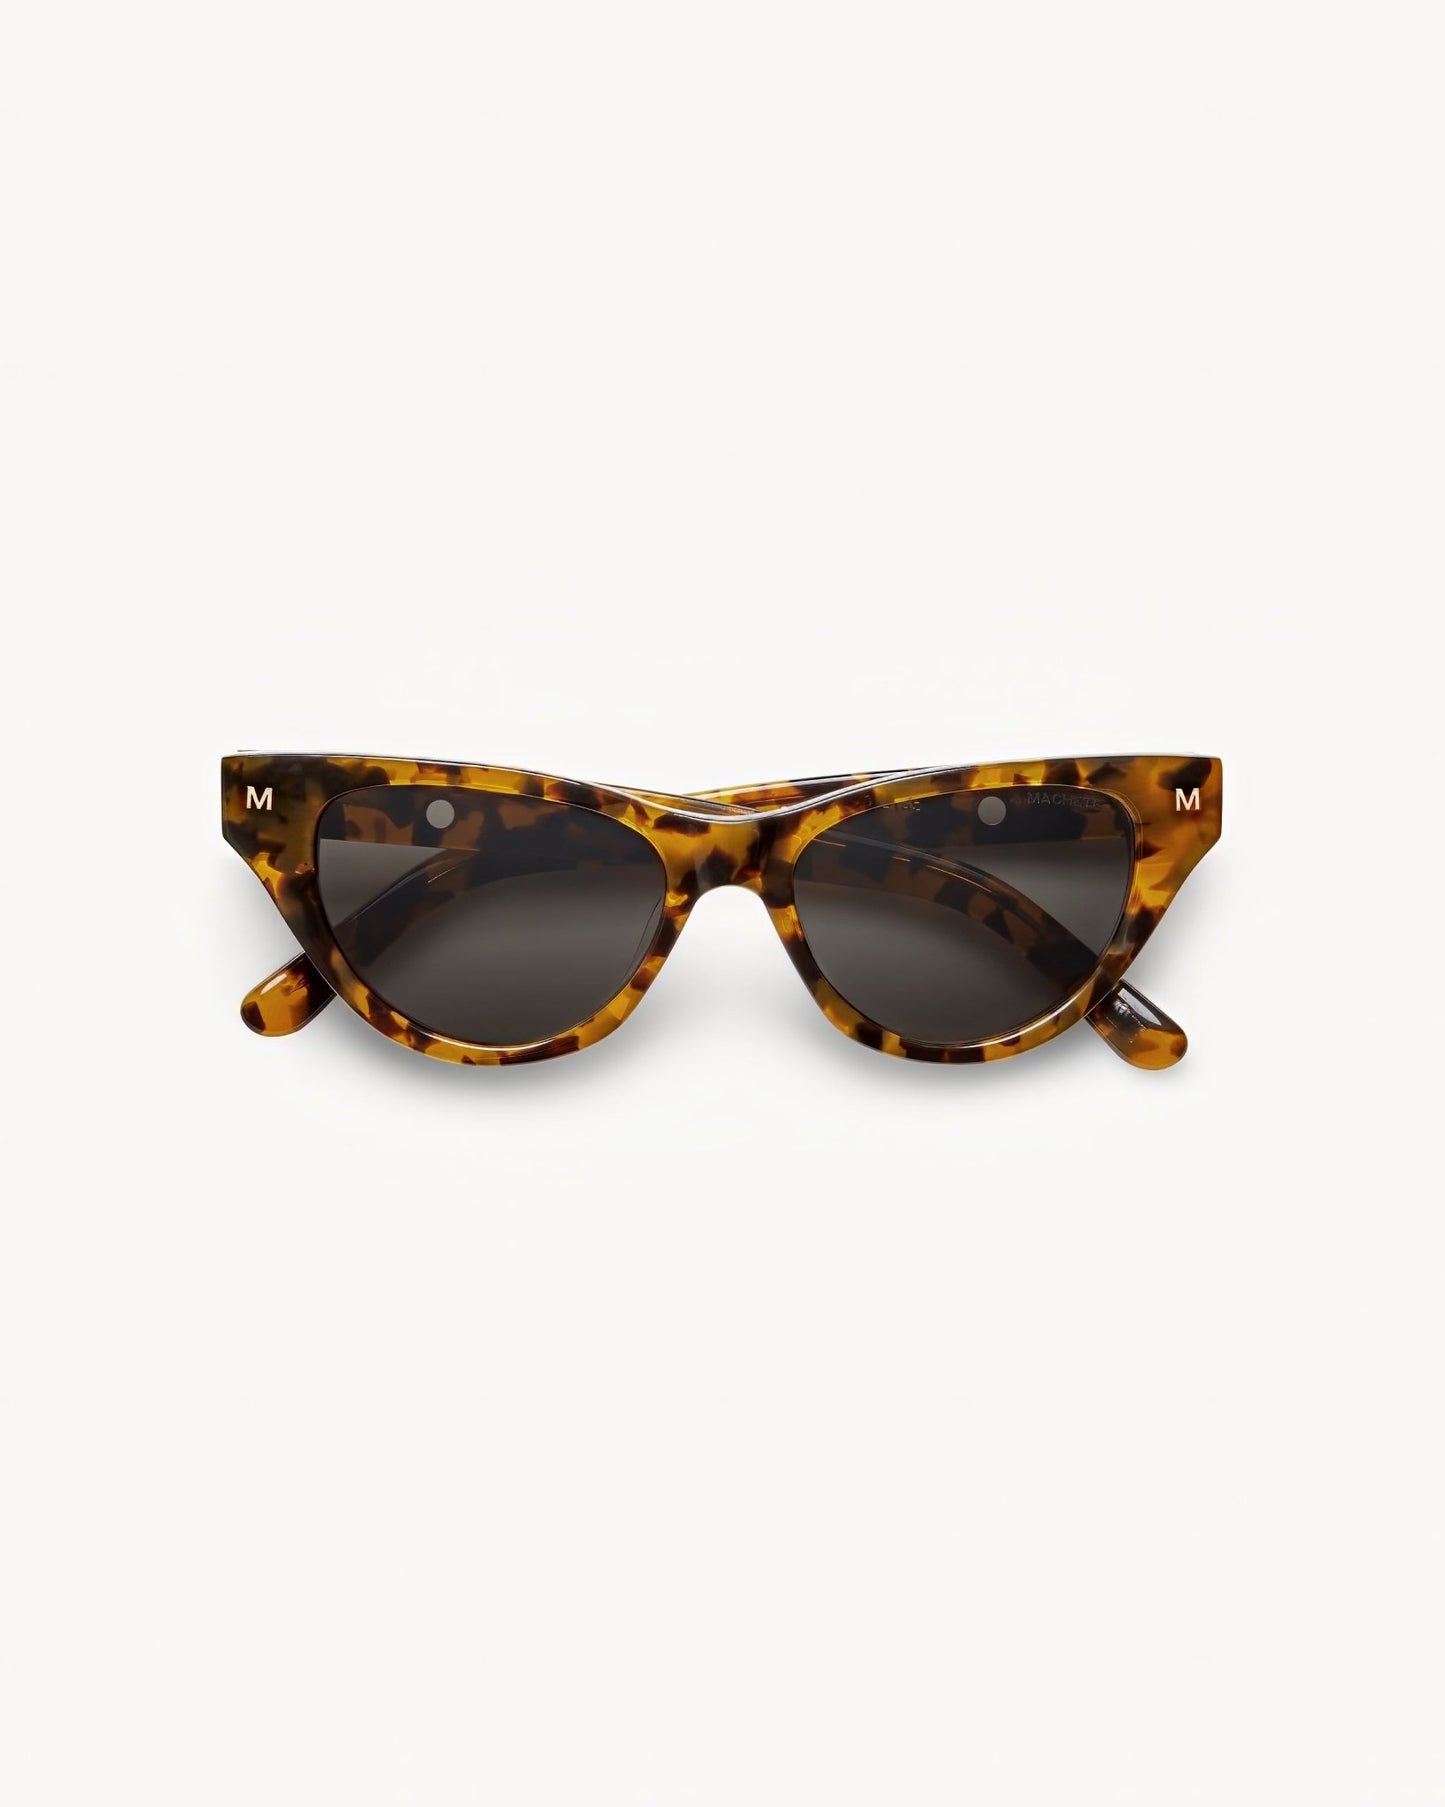 MACHETE Suzy Sunglasses in Classic Tortoise